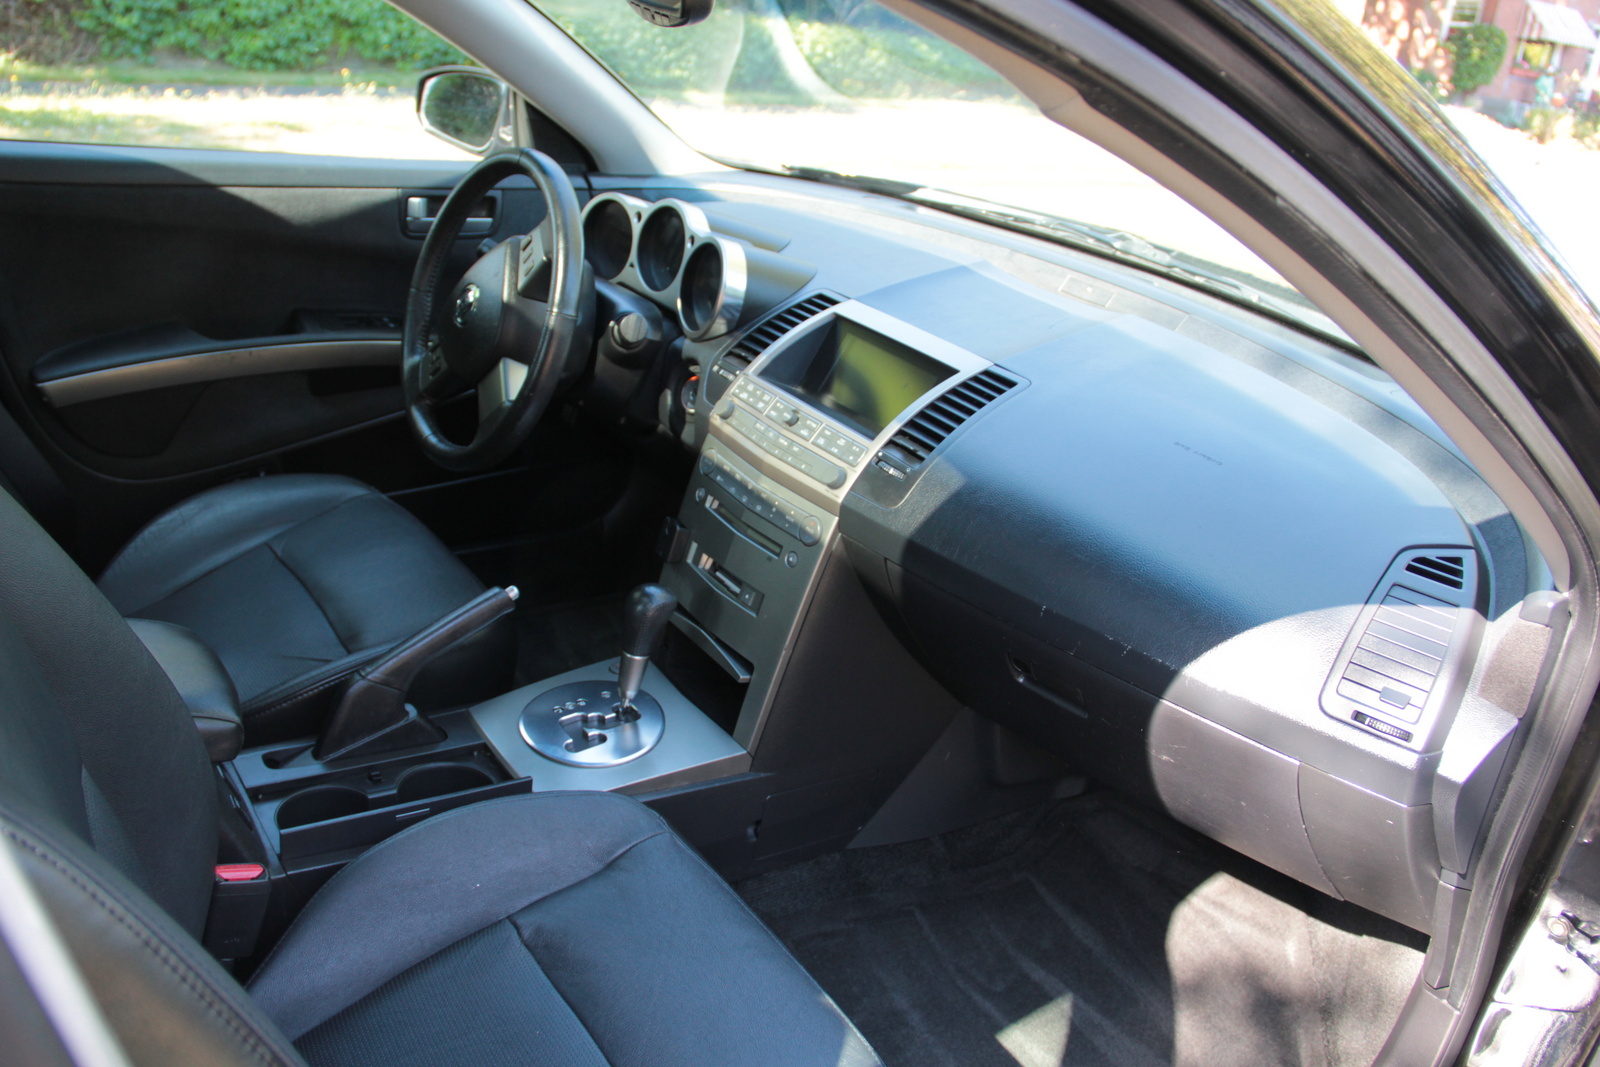 2004 Nissan maxima interior #3